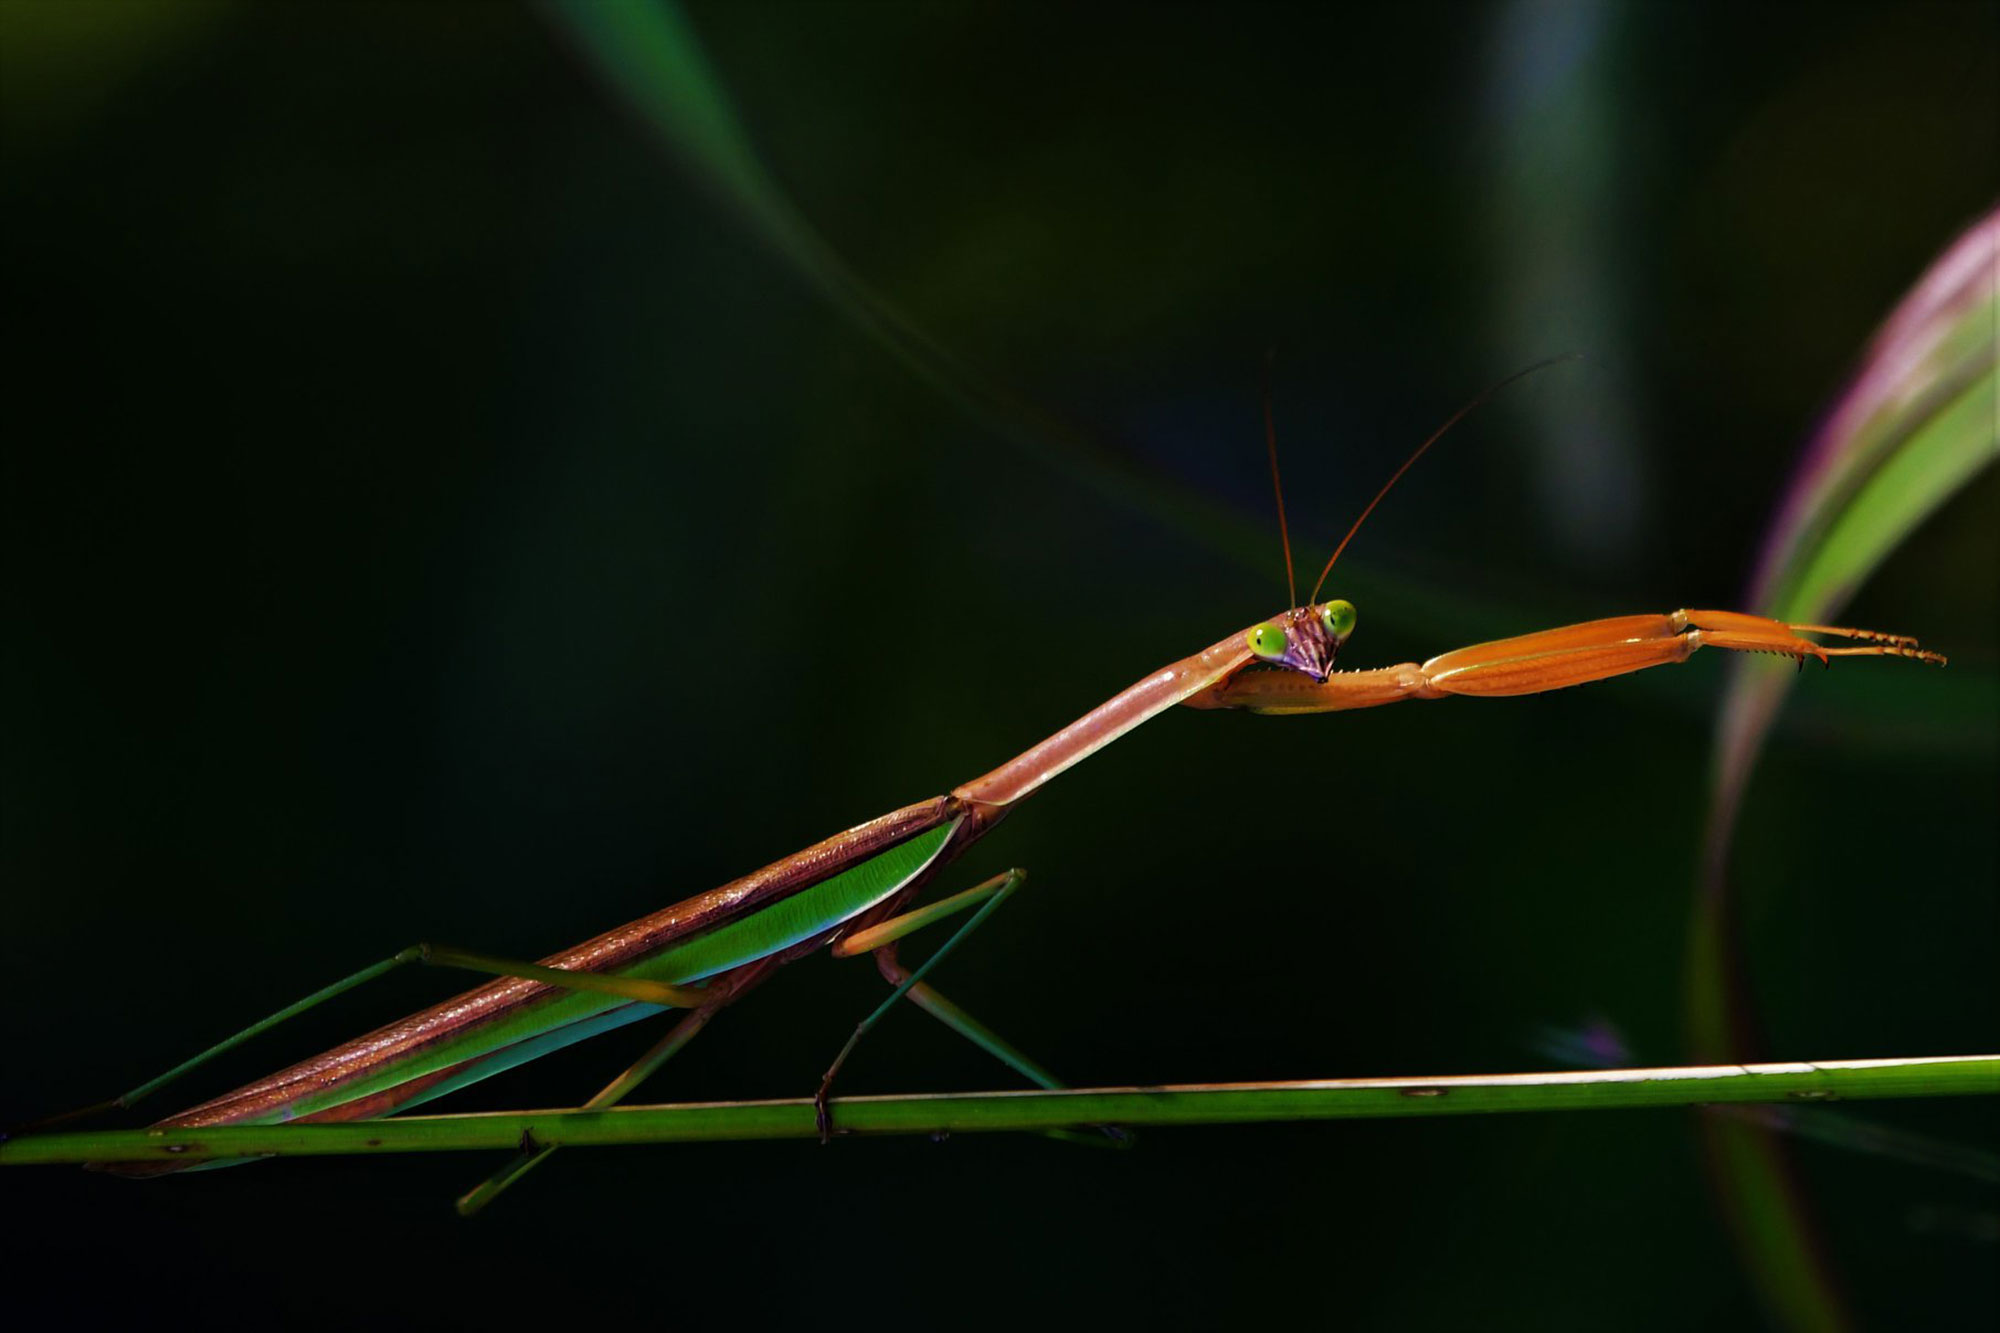 A praying mantis on a stem.